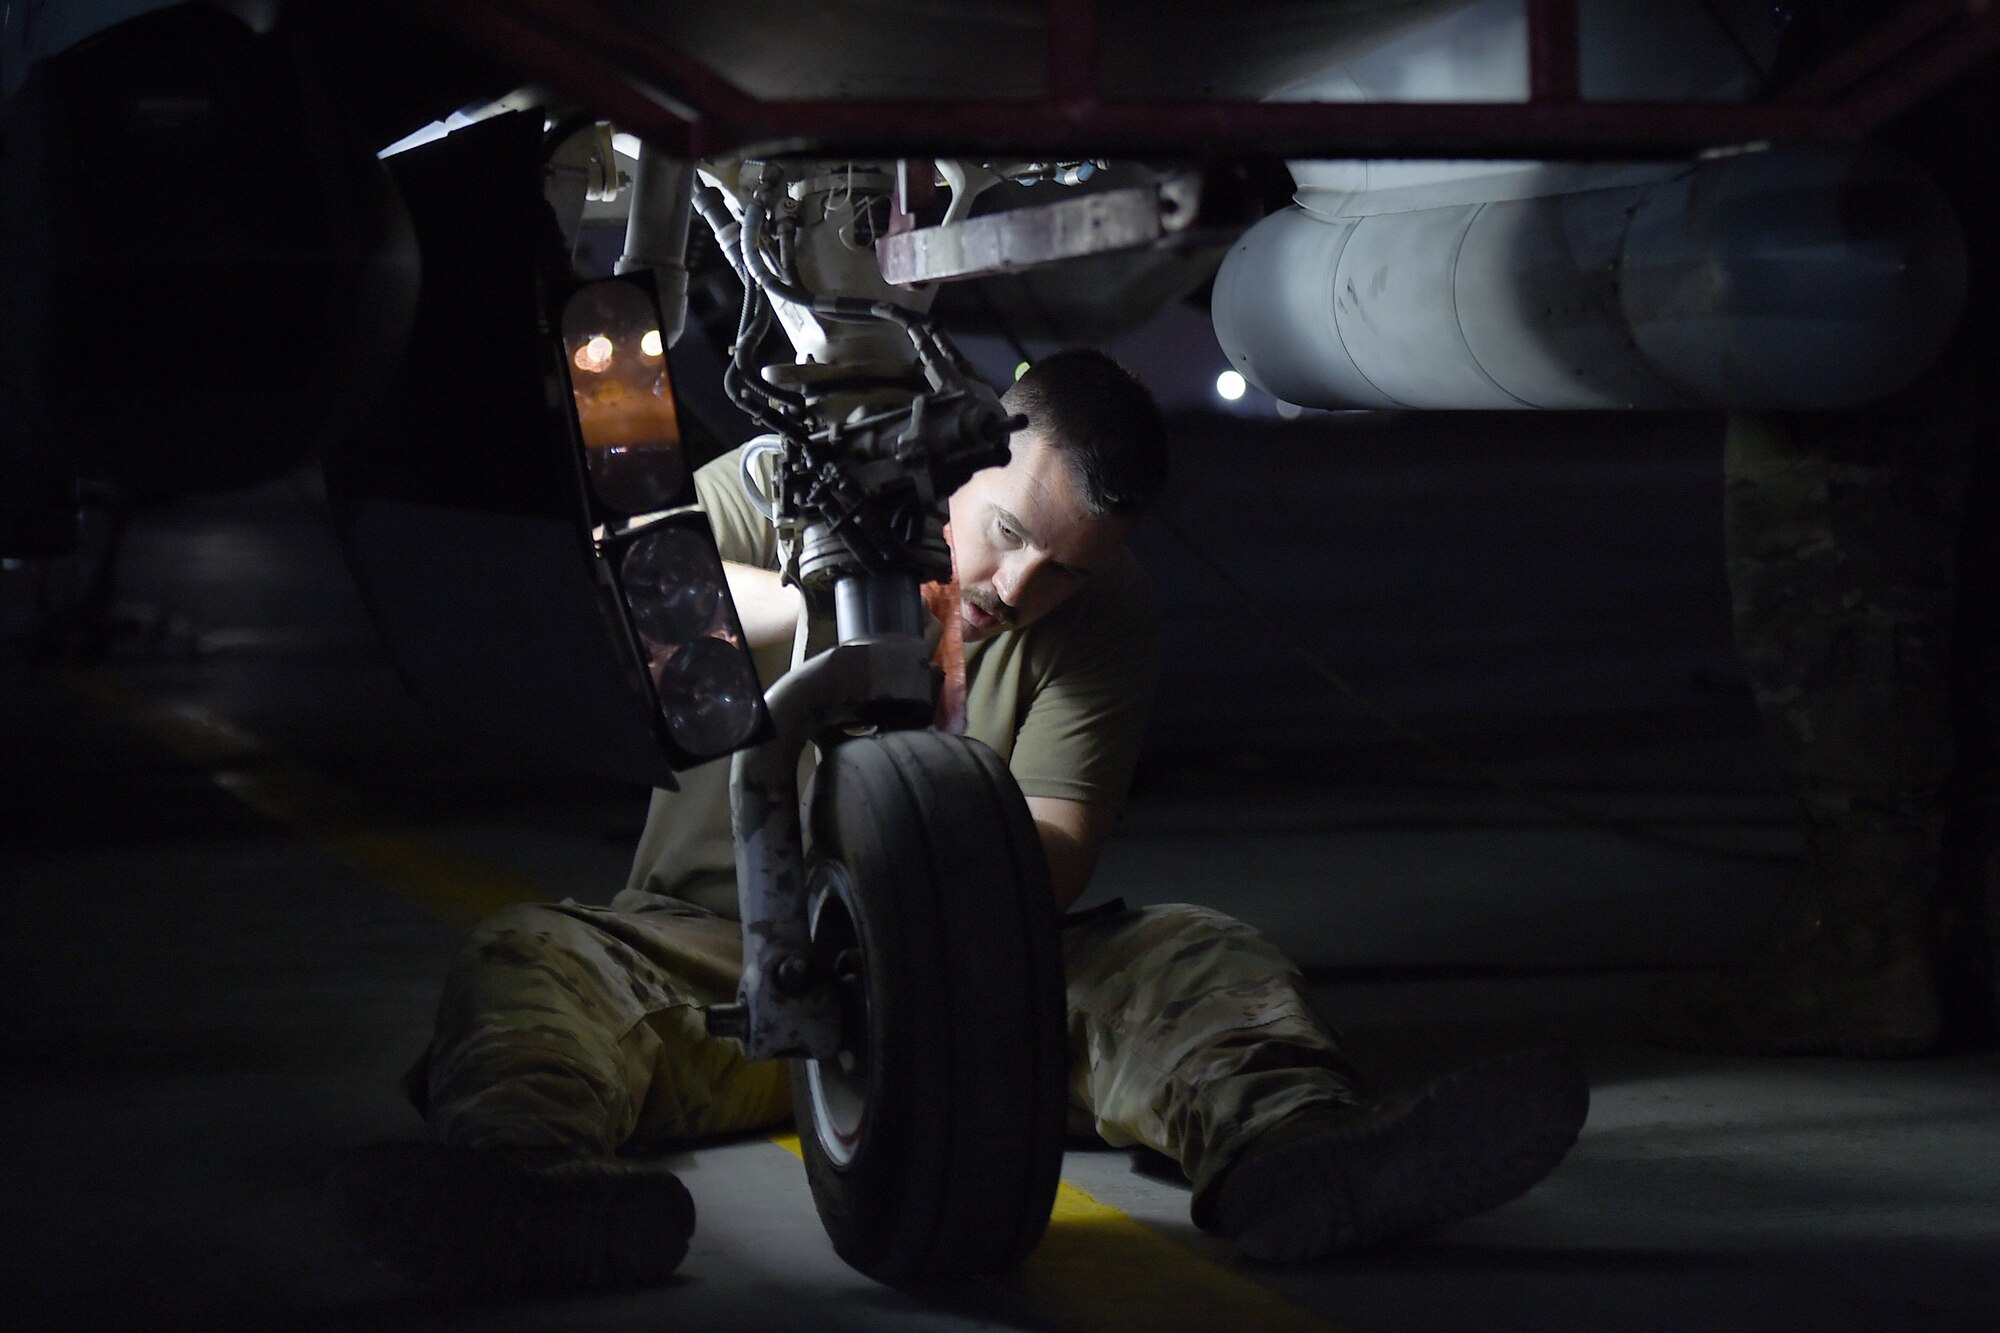 An Airmen works on the flightline at night